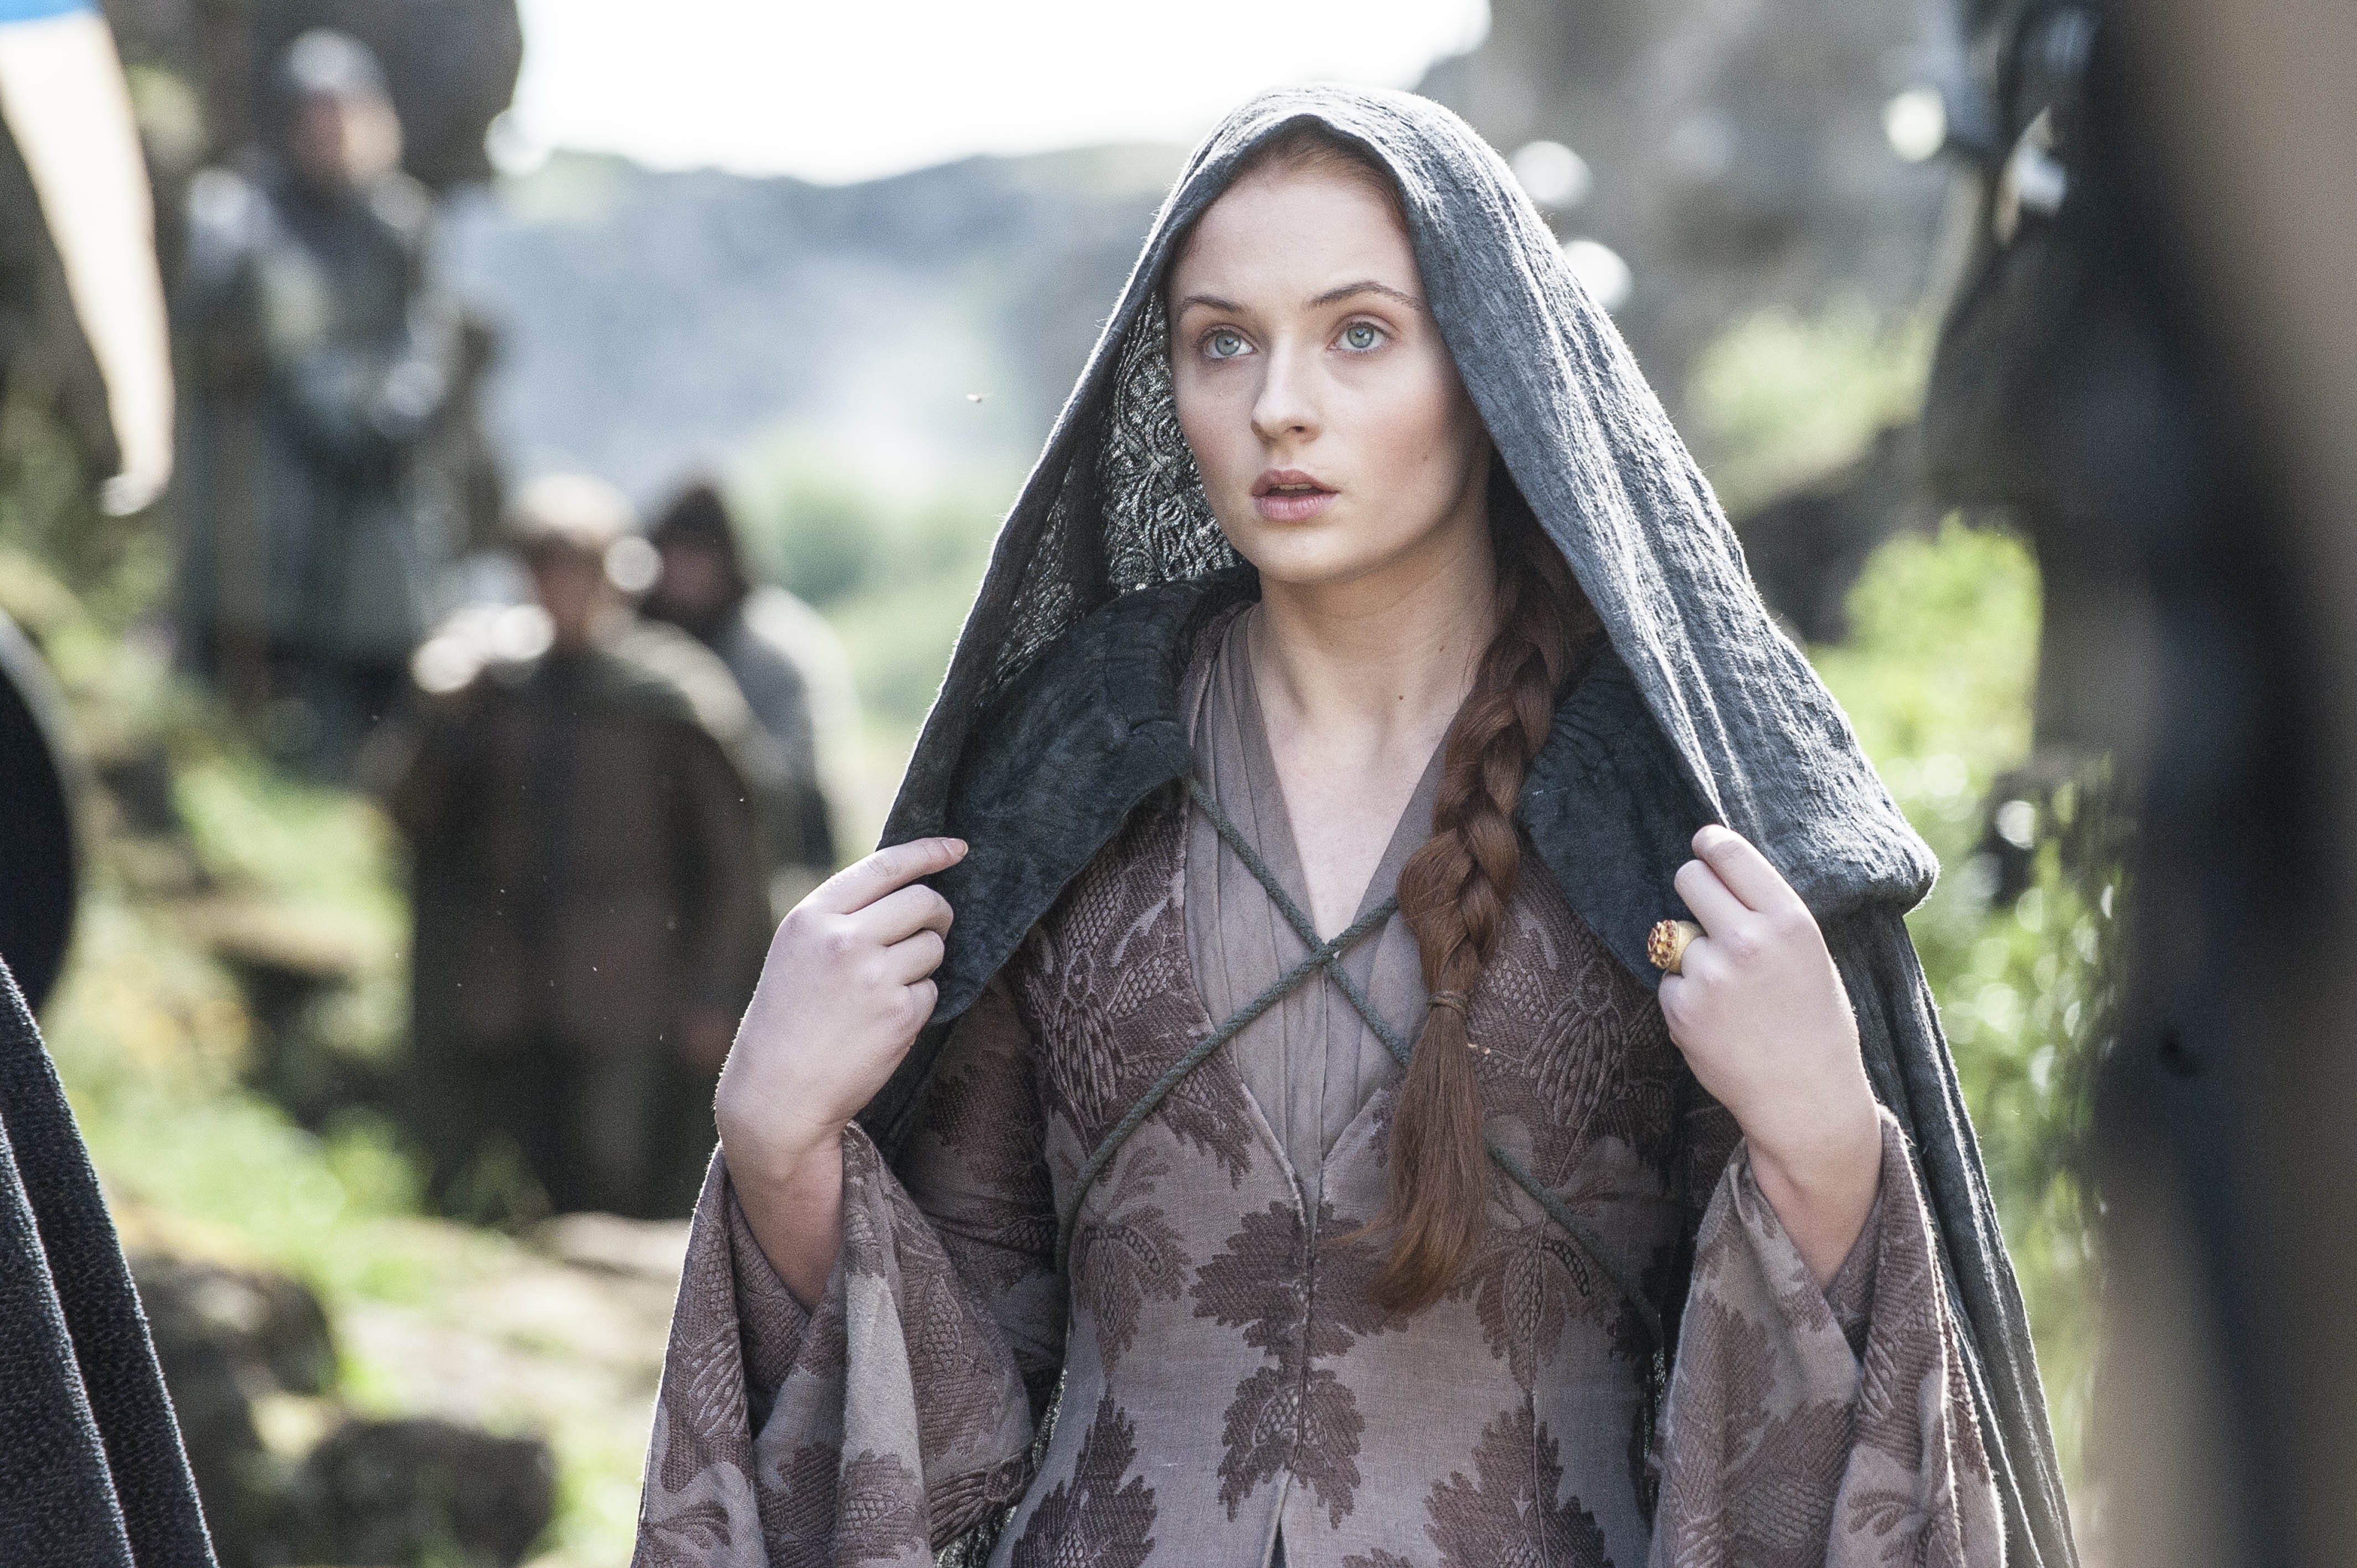 People 4256x2832 Sansa Stark Game of Thrones Sophie Turner women TV series film stills hoods long hair brunette fantasy girl actress British women